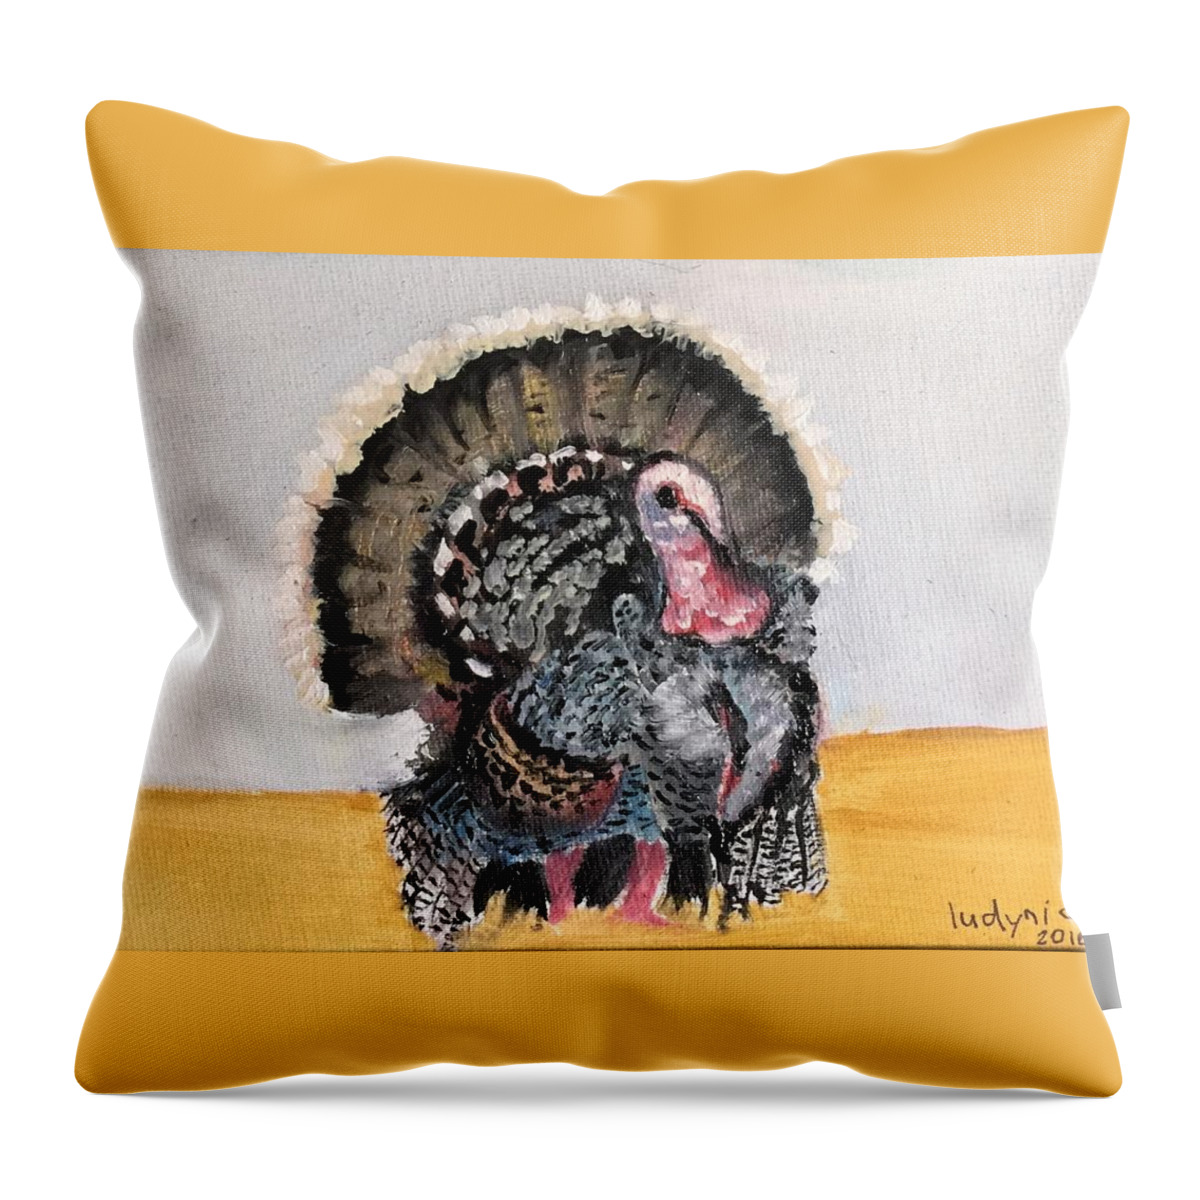 Turkey Throw Pillow featuring the painting Turkey #5 by Ryszard Ludynia